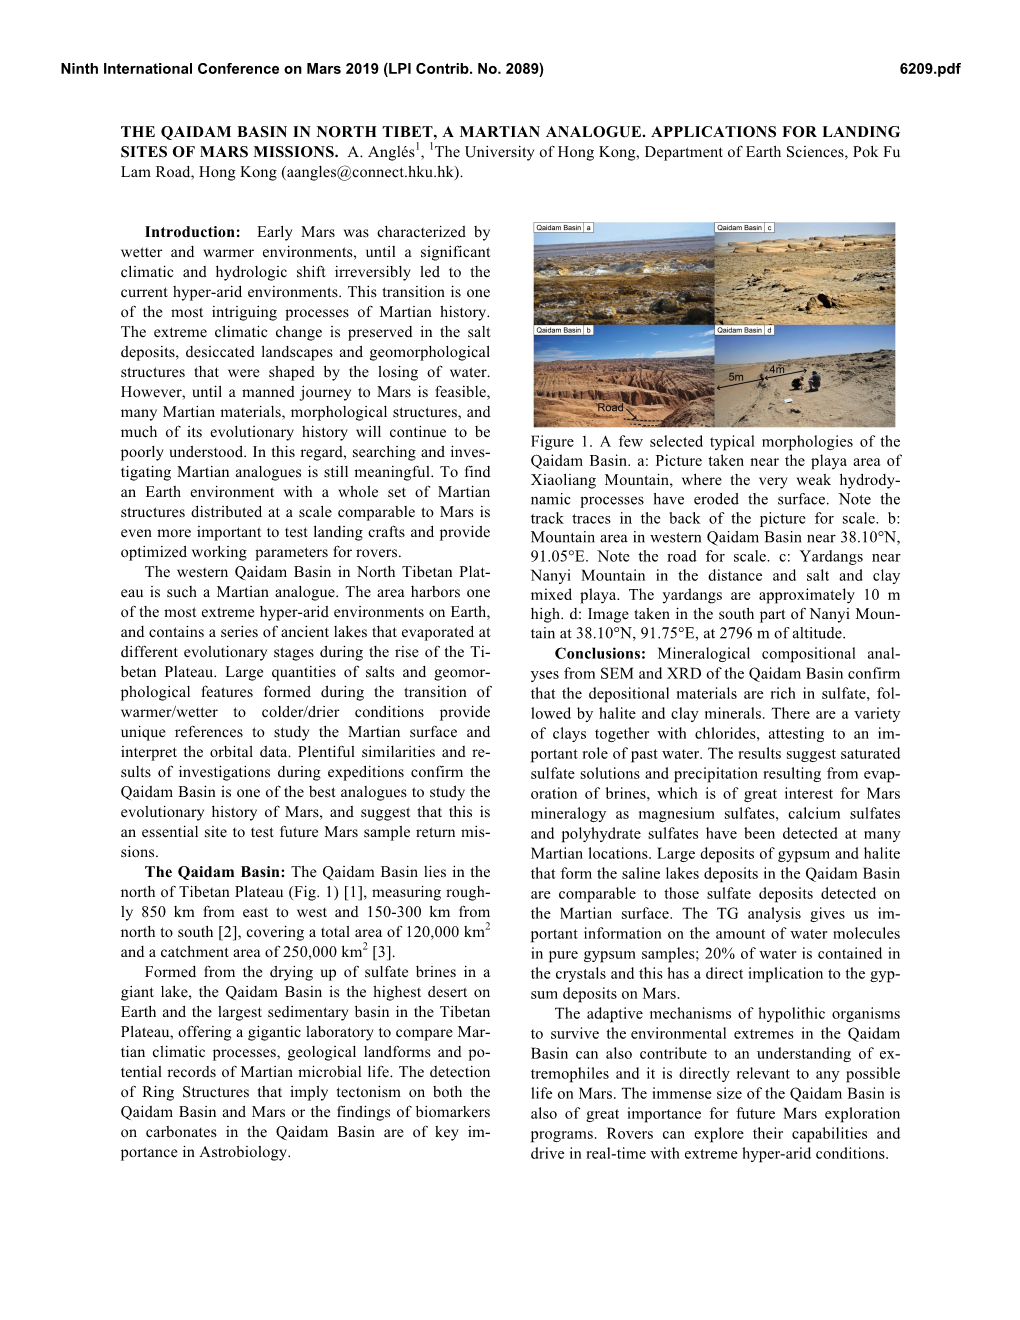 The Qaidam Basin in North Tibet, a Martian Analogue